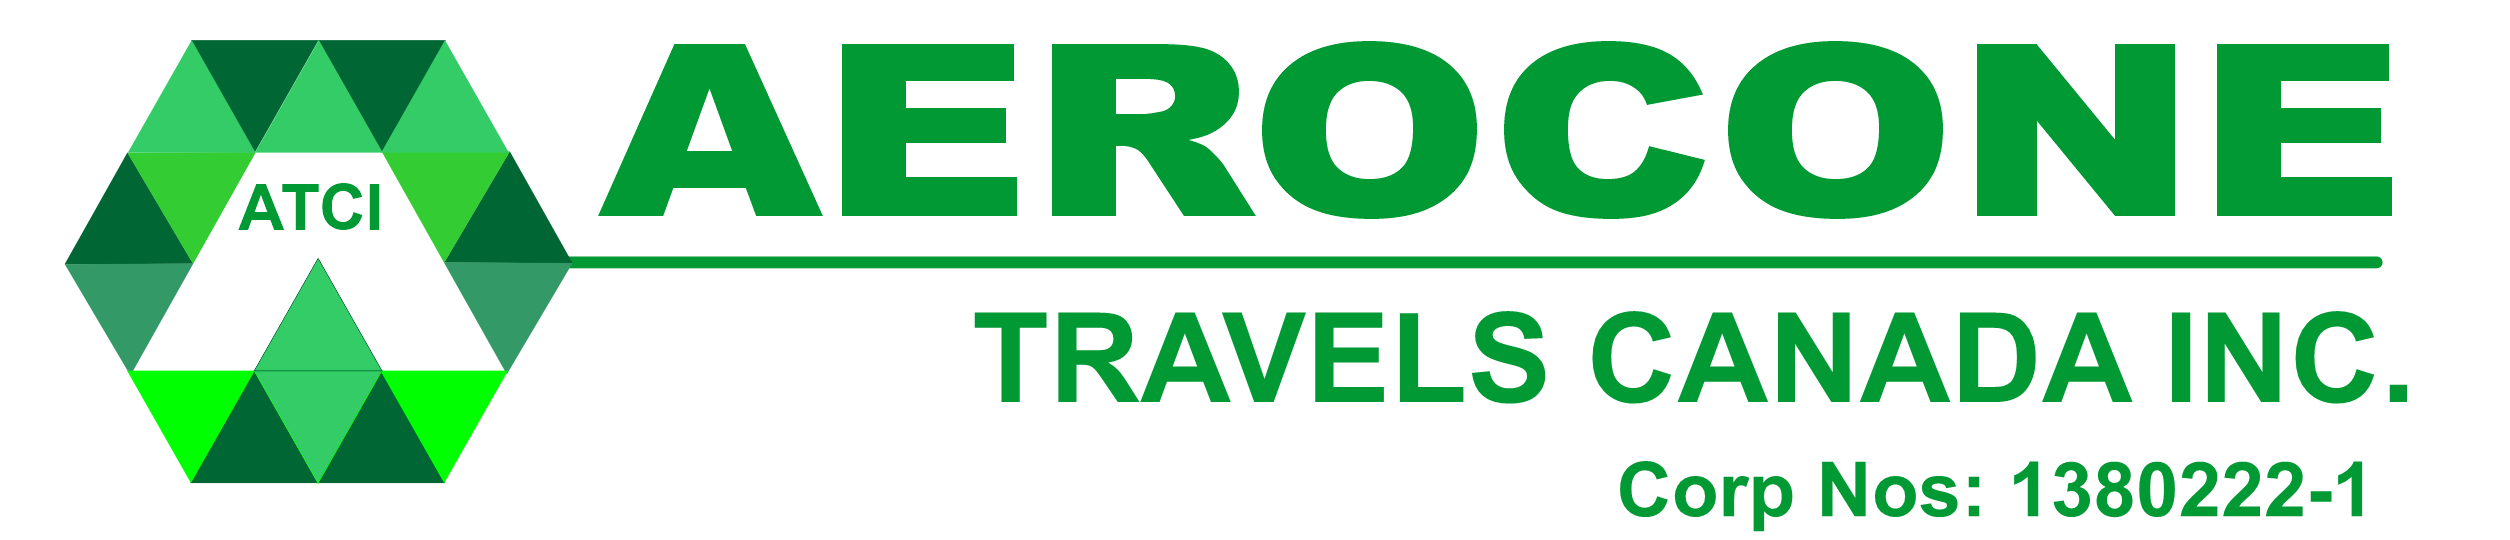 Aerocone Travels Canada Inc